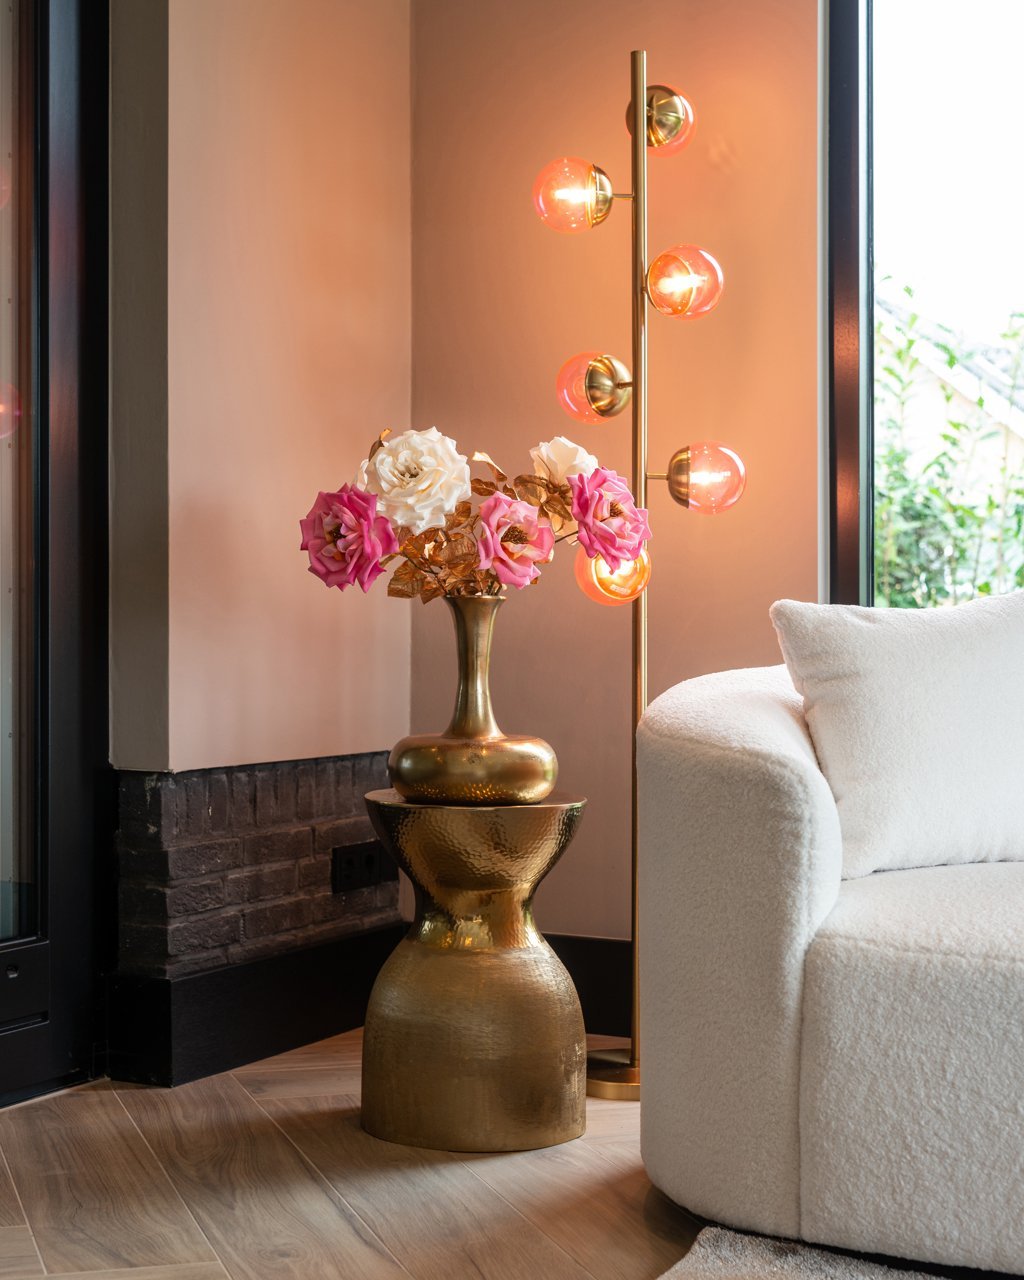 Soedan Blozend prins Design vloerlamp roze | Zola | H. 166 cm | Esentimo